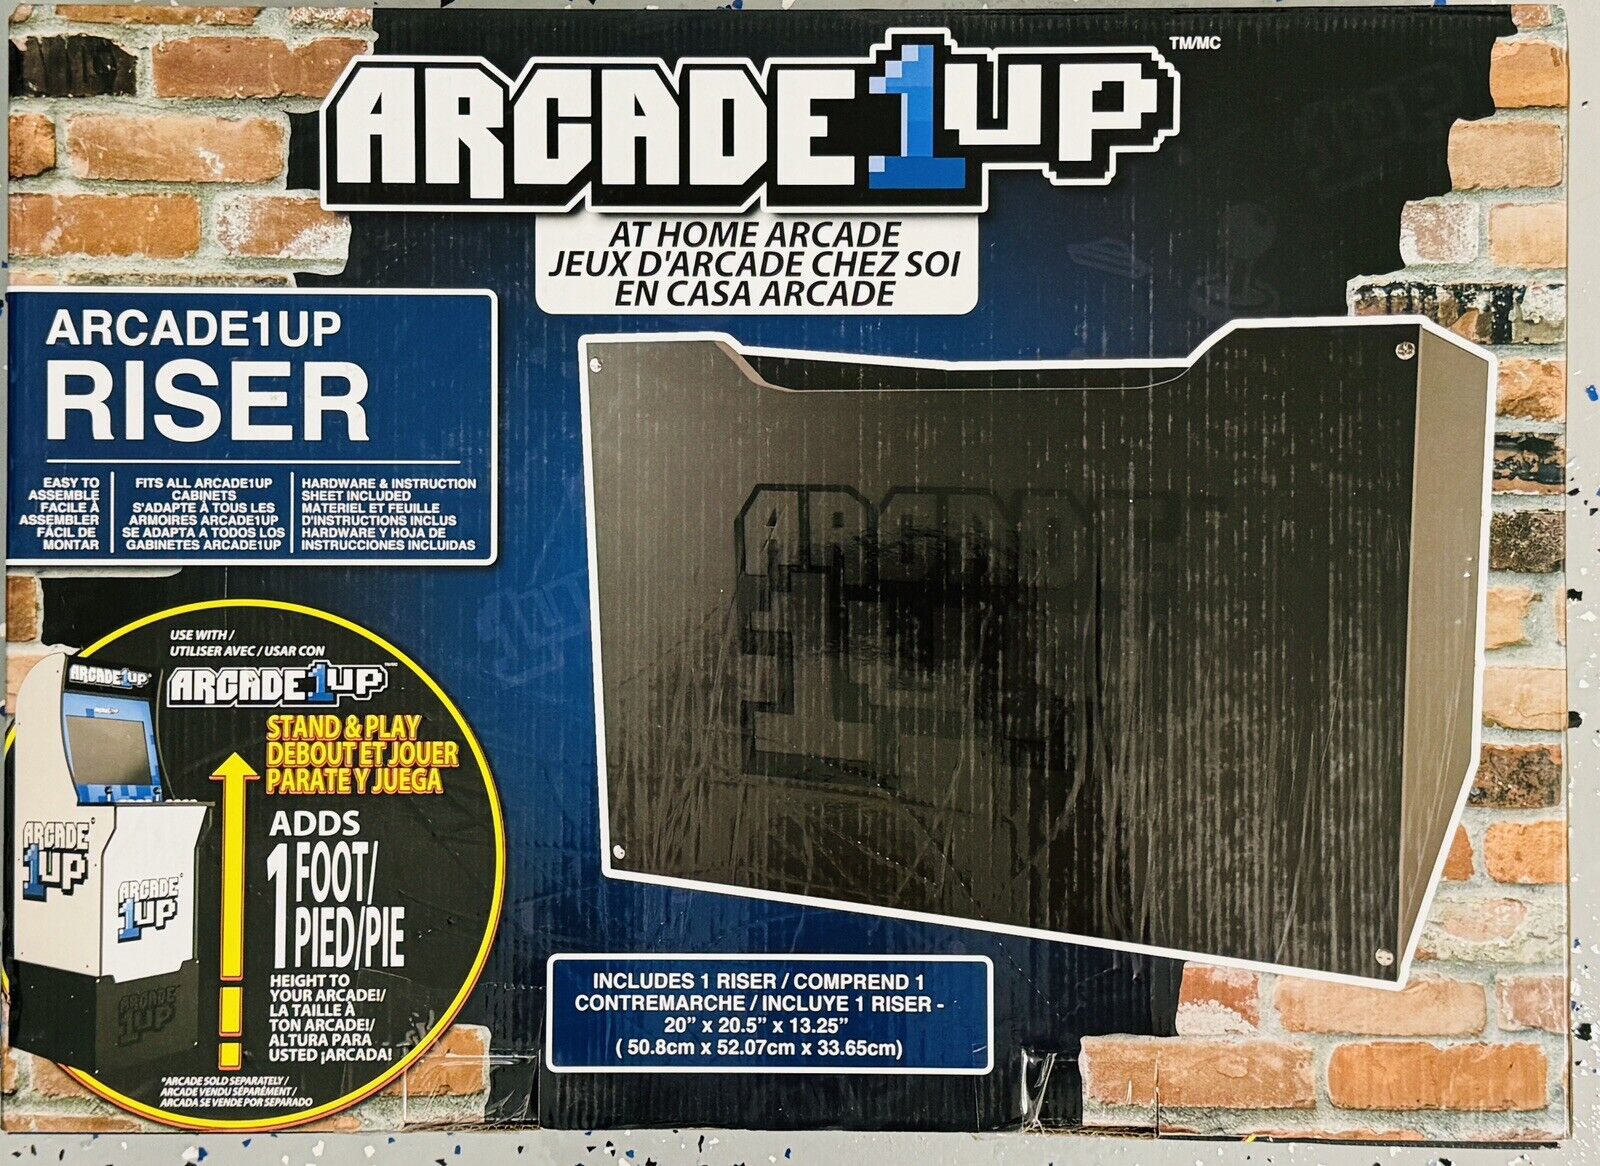 Arcade1up Original Branded Riser Black Adds 1 Foot Height Arcade 1 Up Games